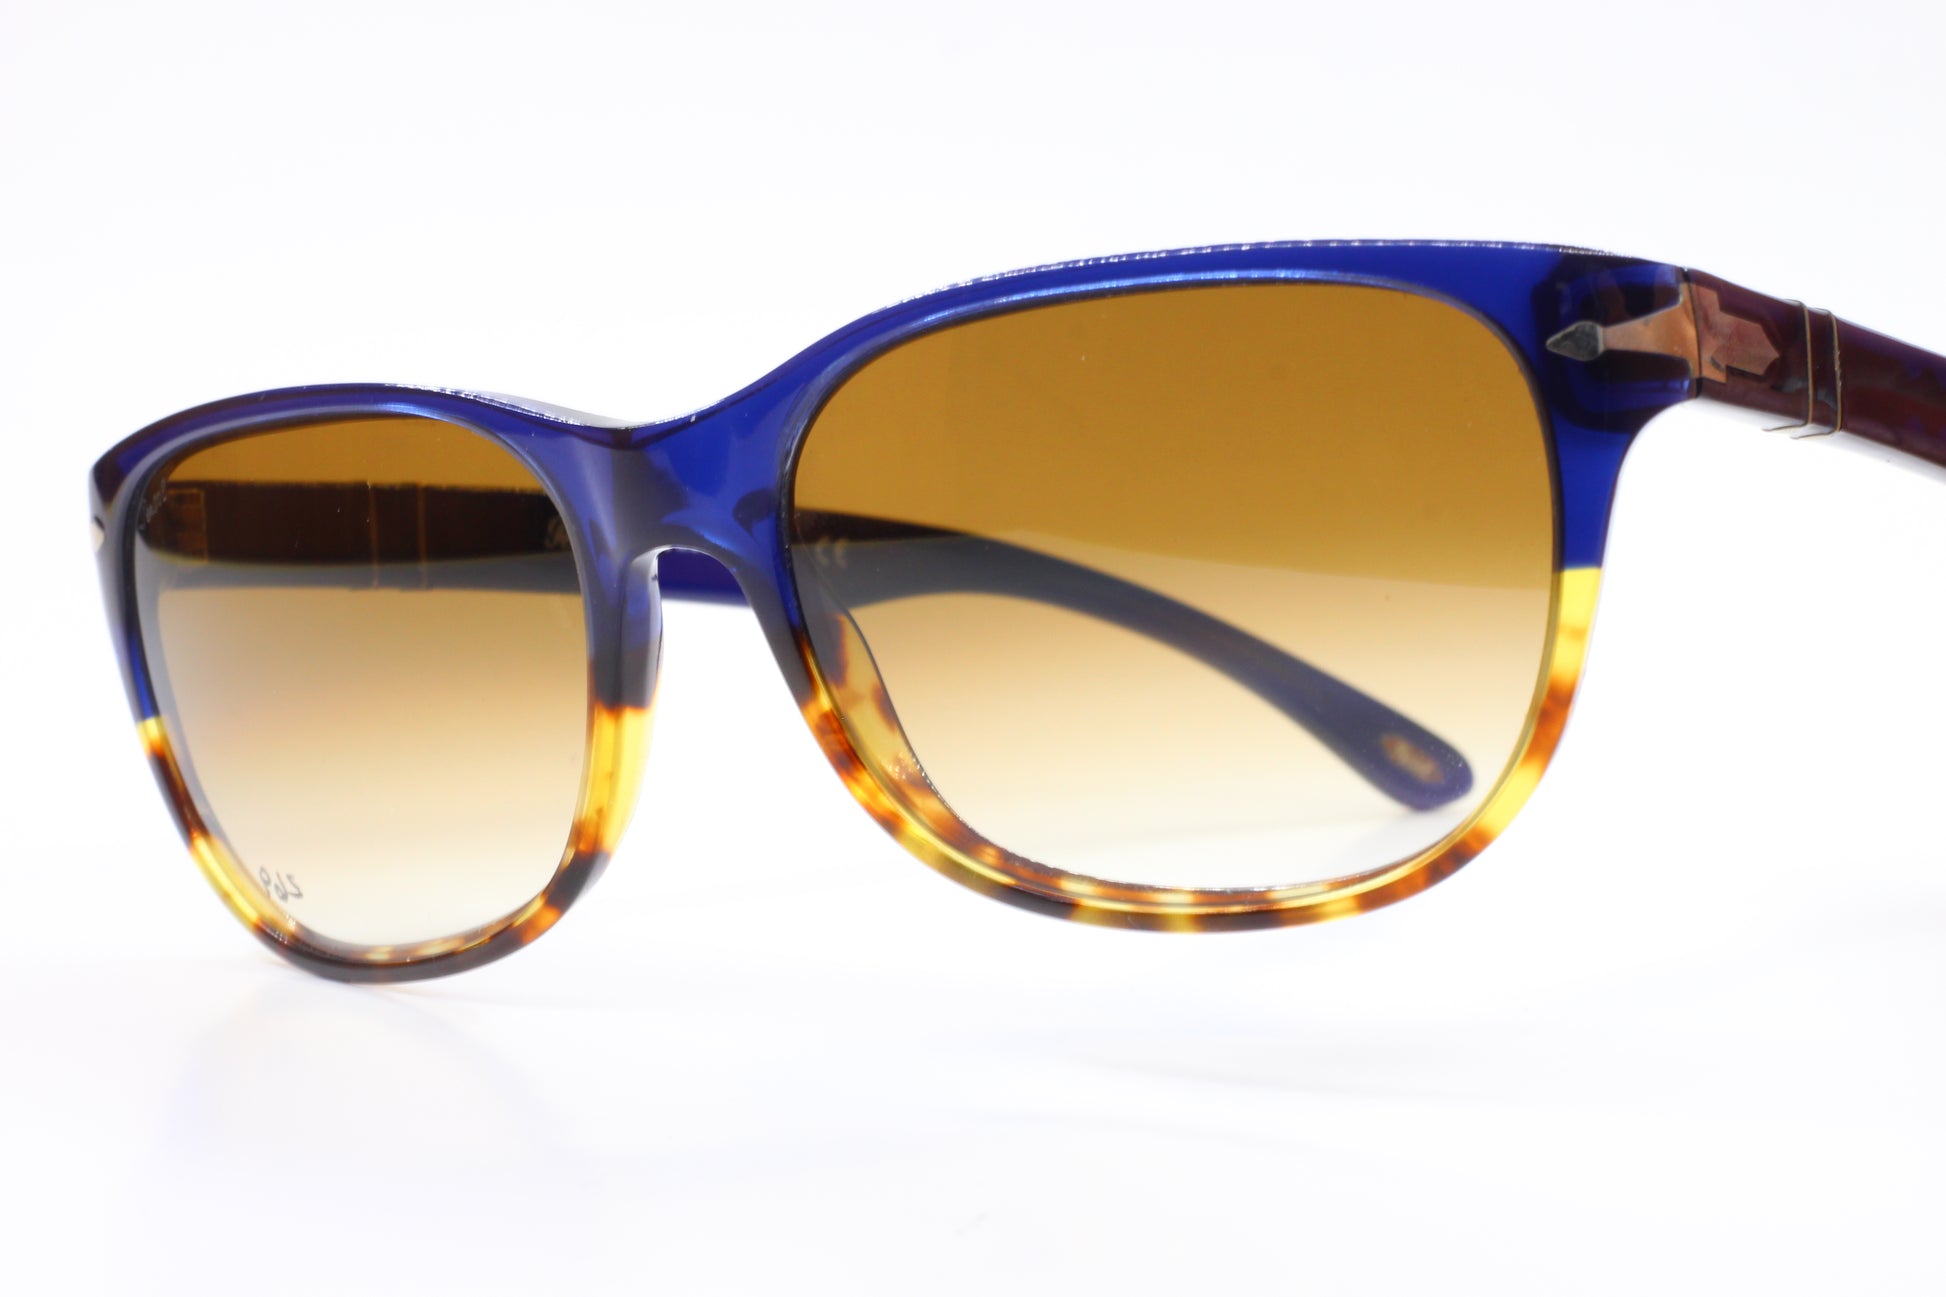 Persol PO3020-S 955/51 57mm Blue Brown Havana Tortoise Sunglasses - Men, sunglasses, Women